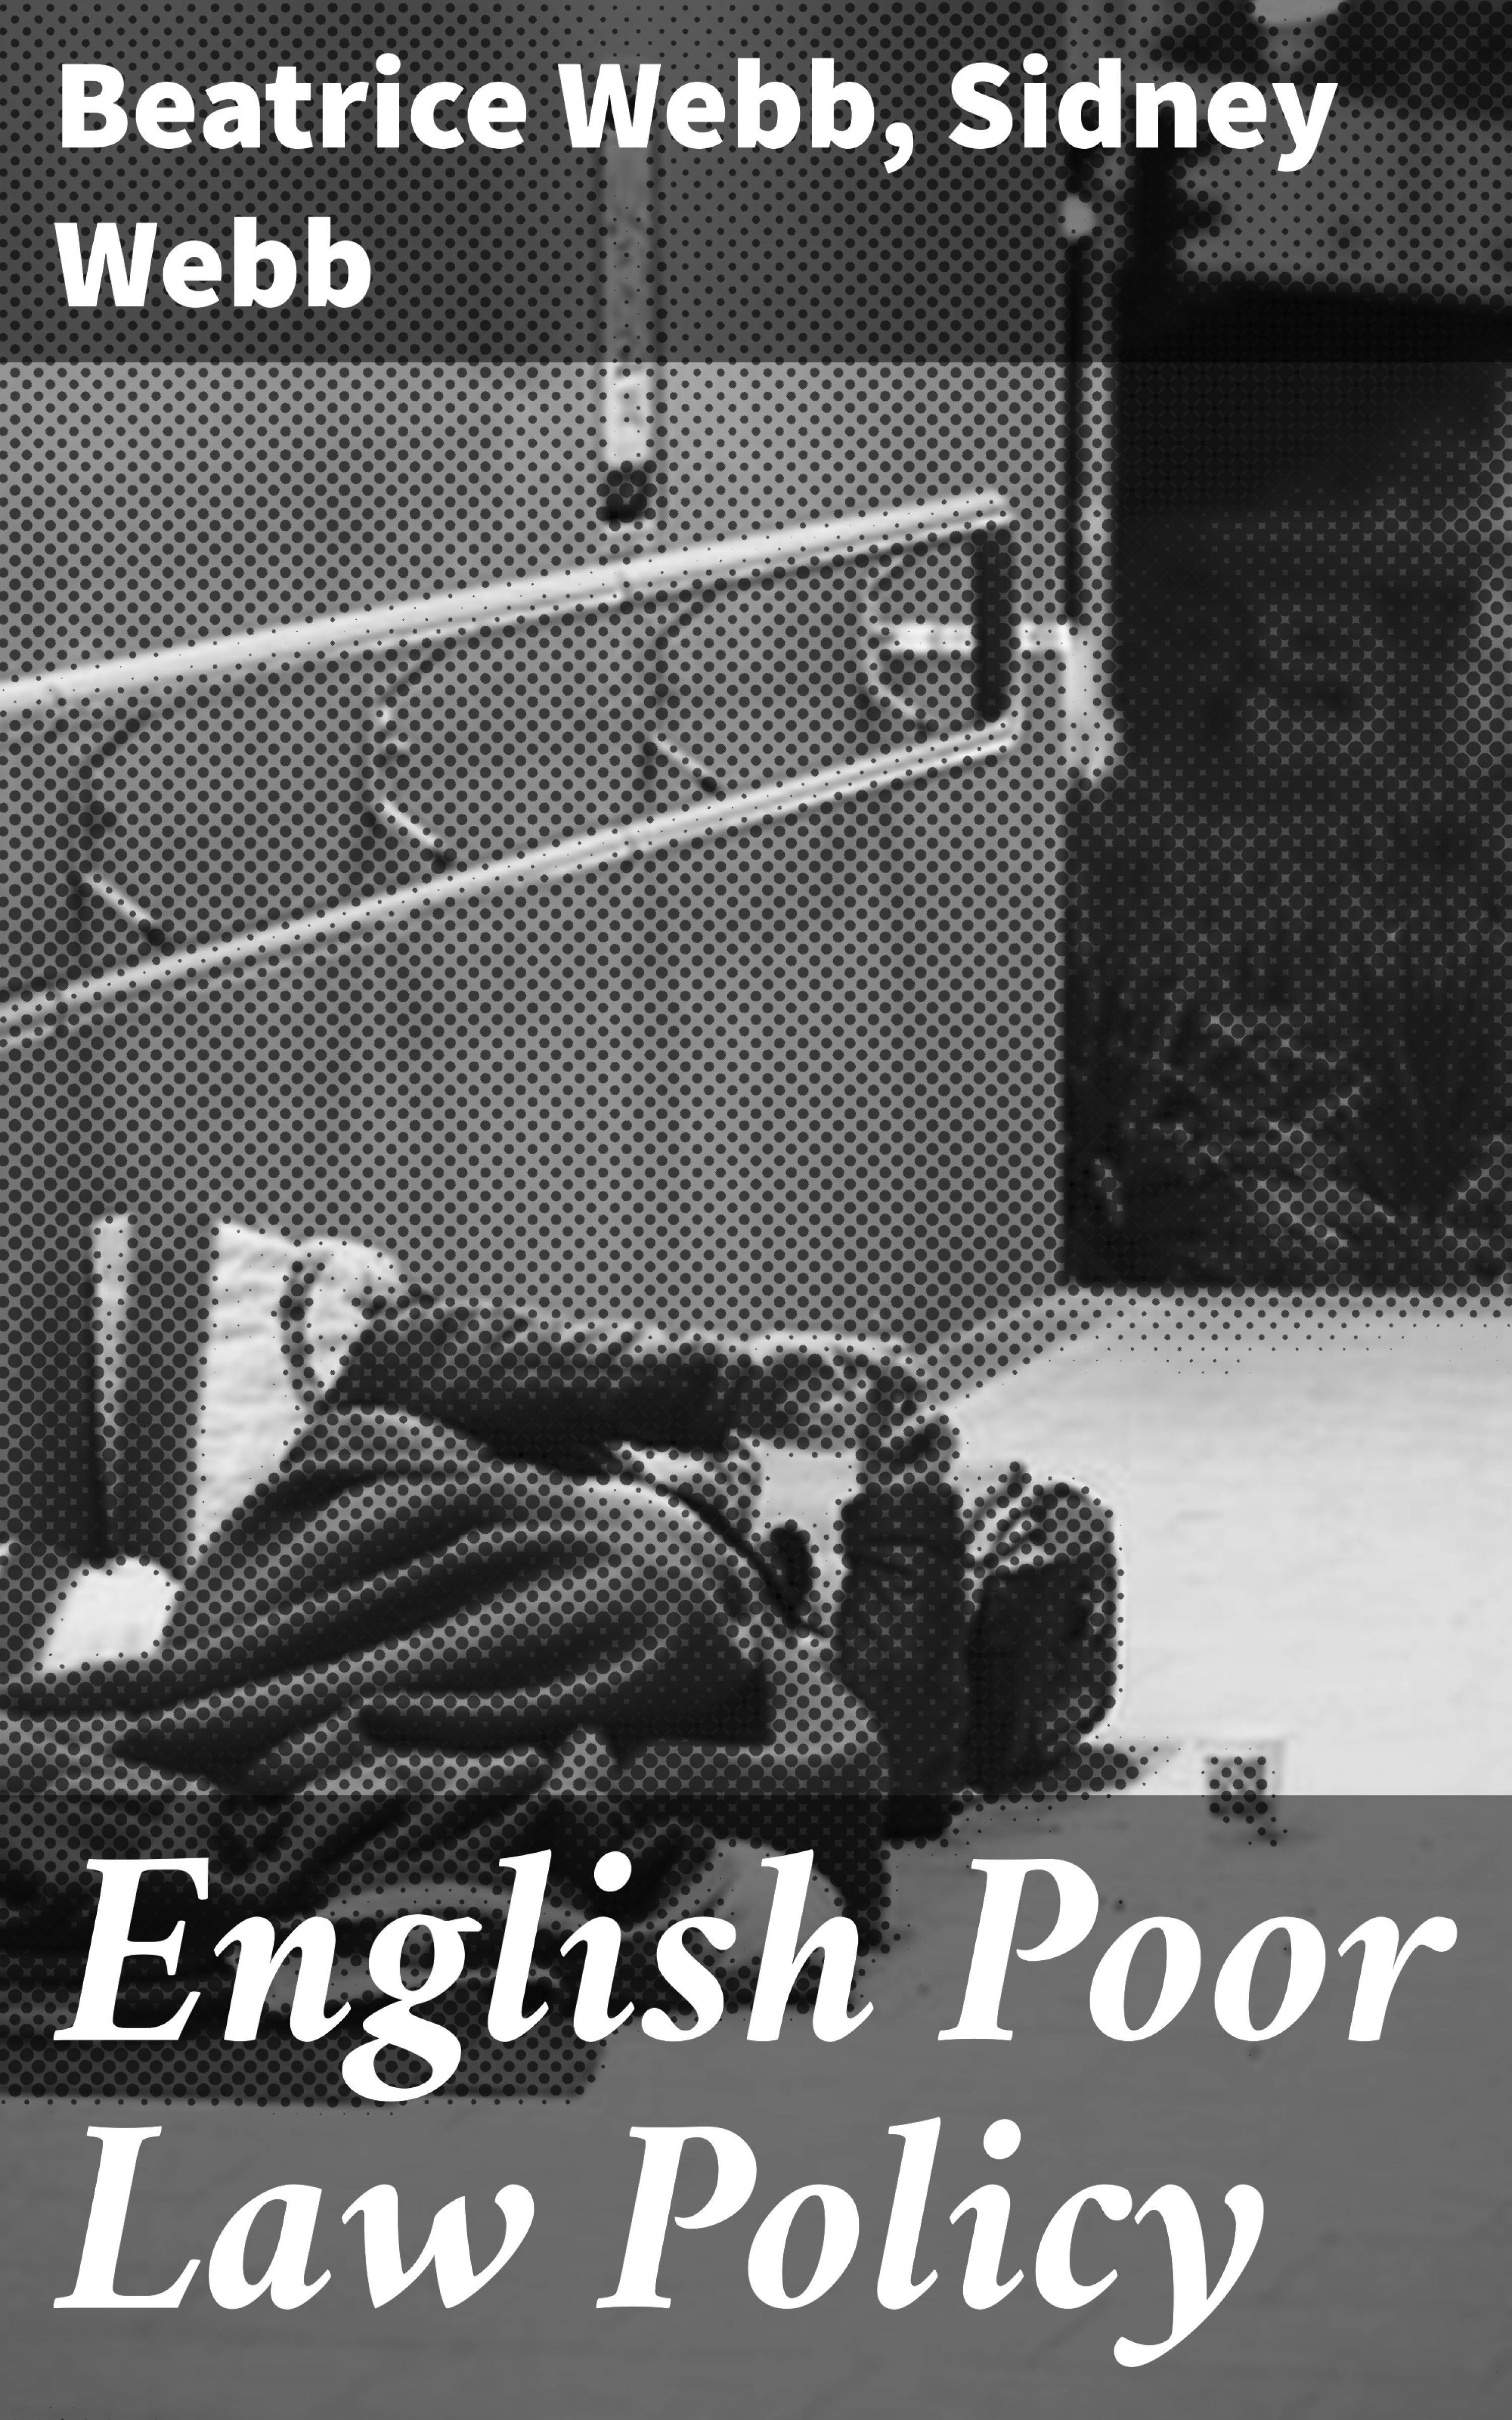 English Poor Law Policy - Sidney Webb, Beatrice Webb